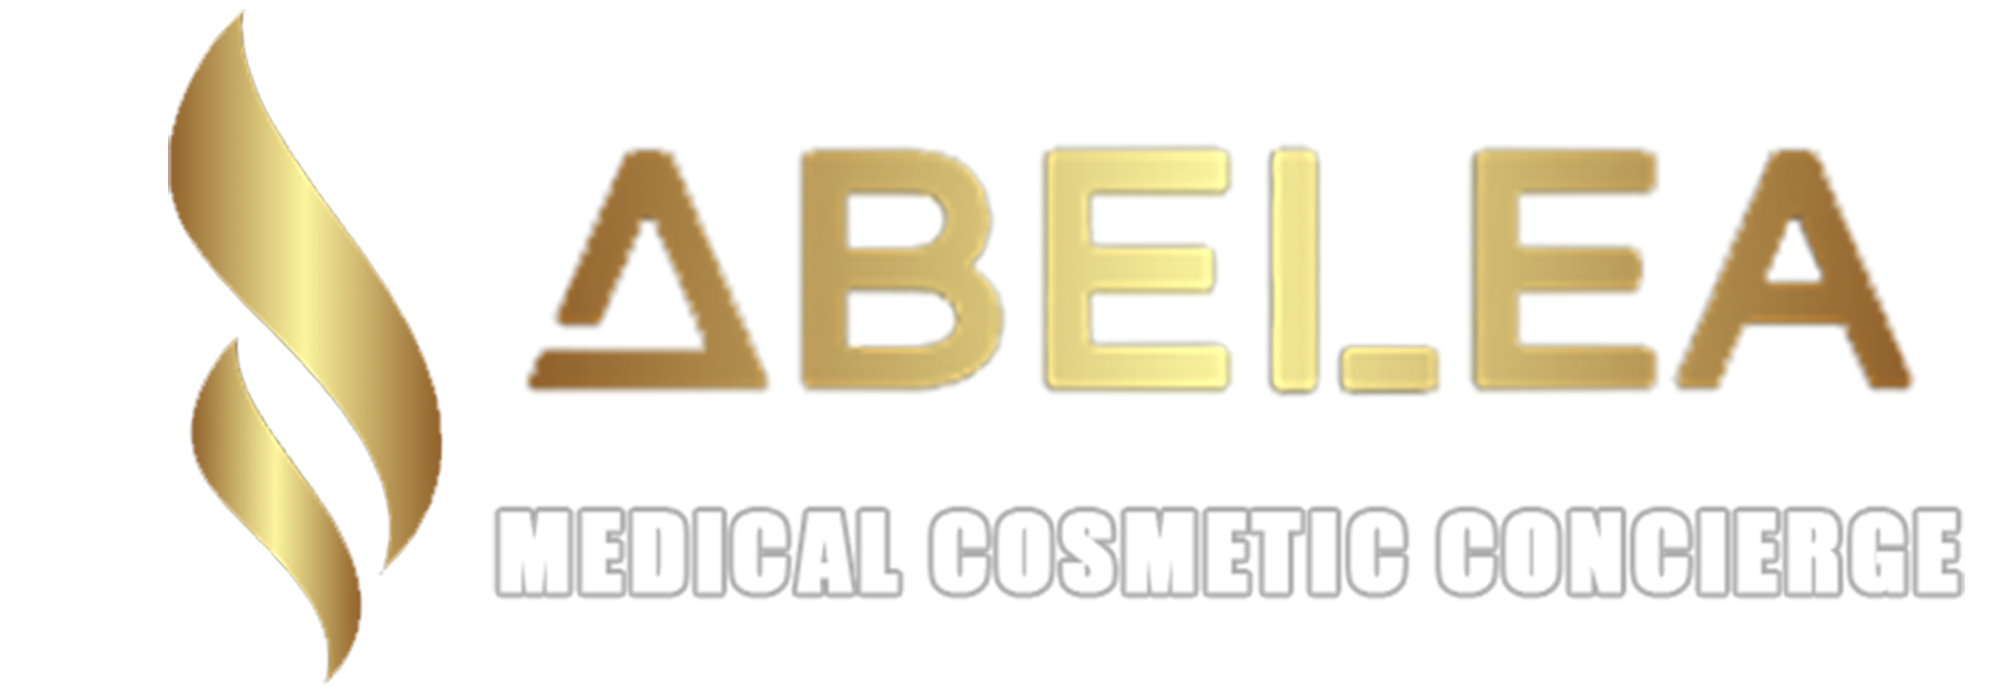 AbeLea Medical Cosmetics Concierge